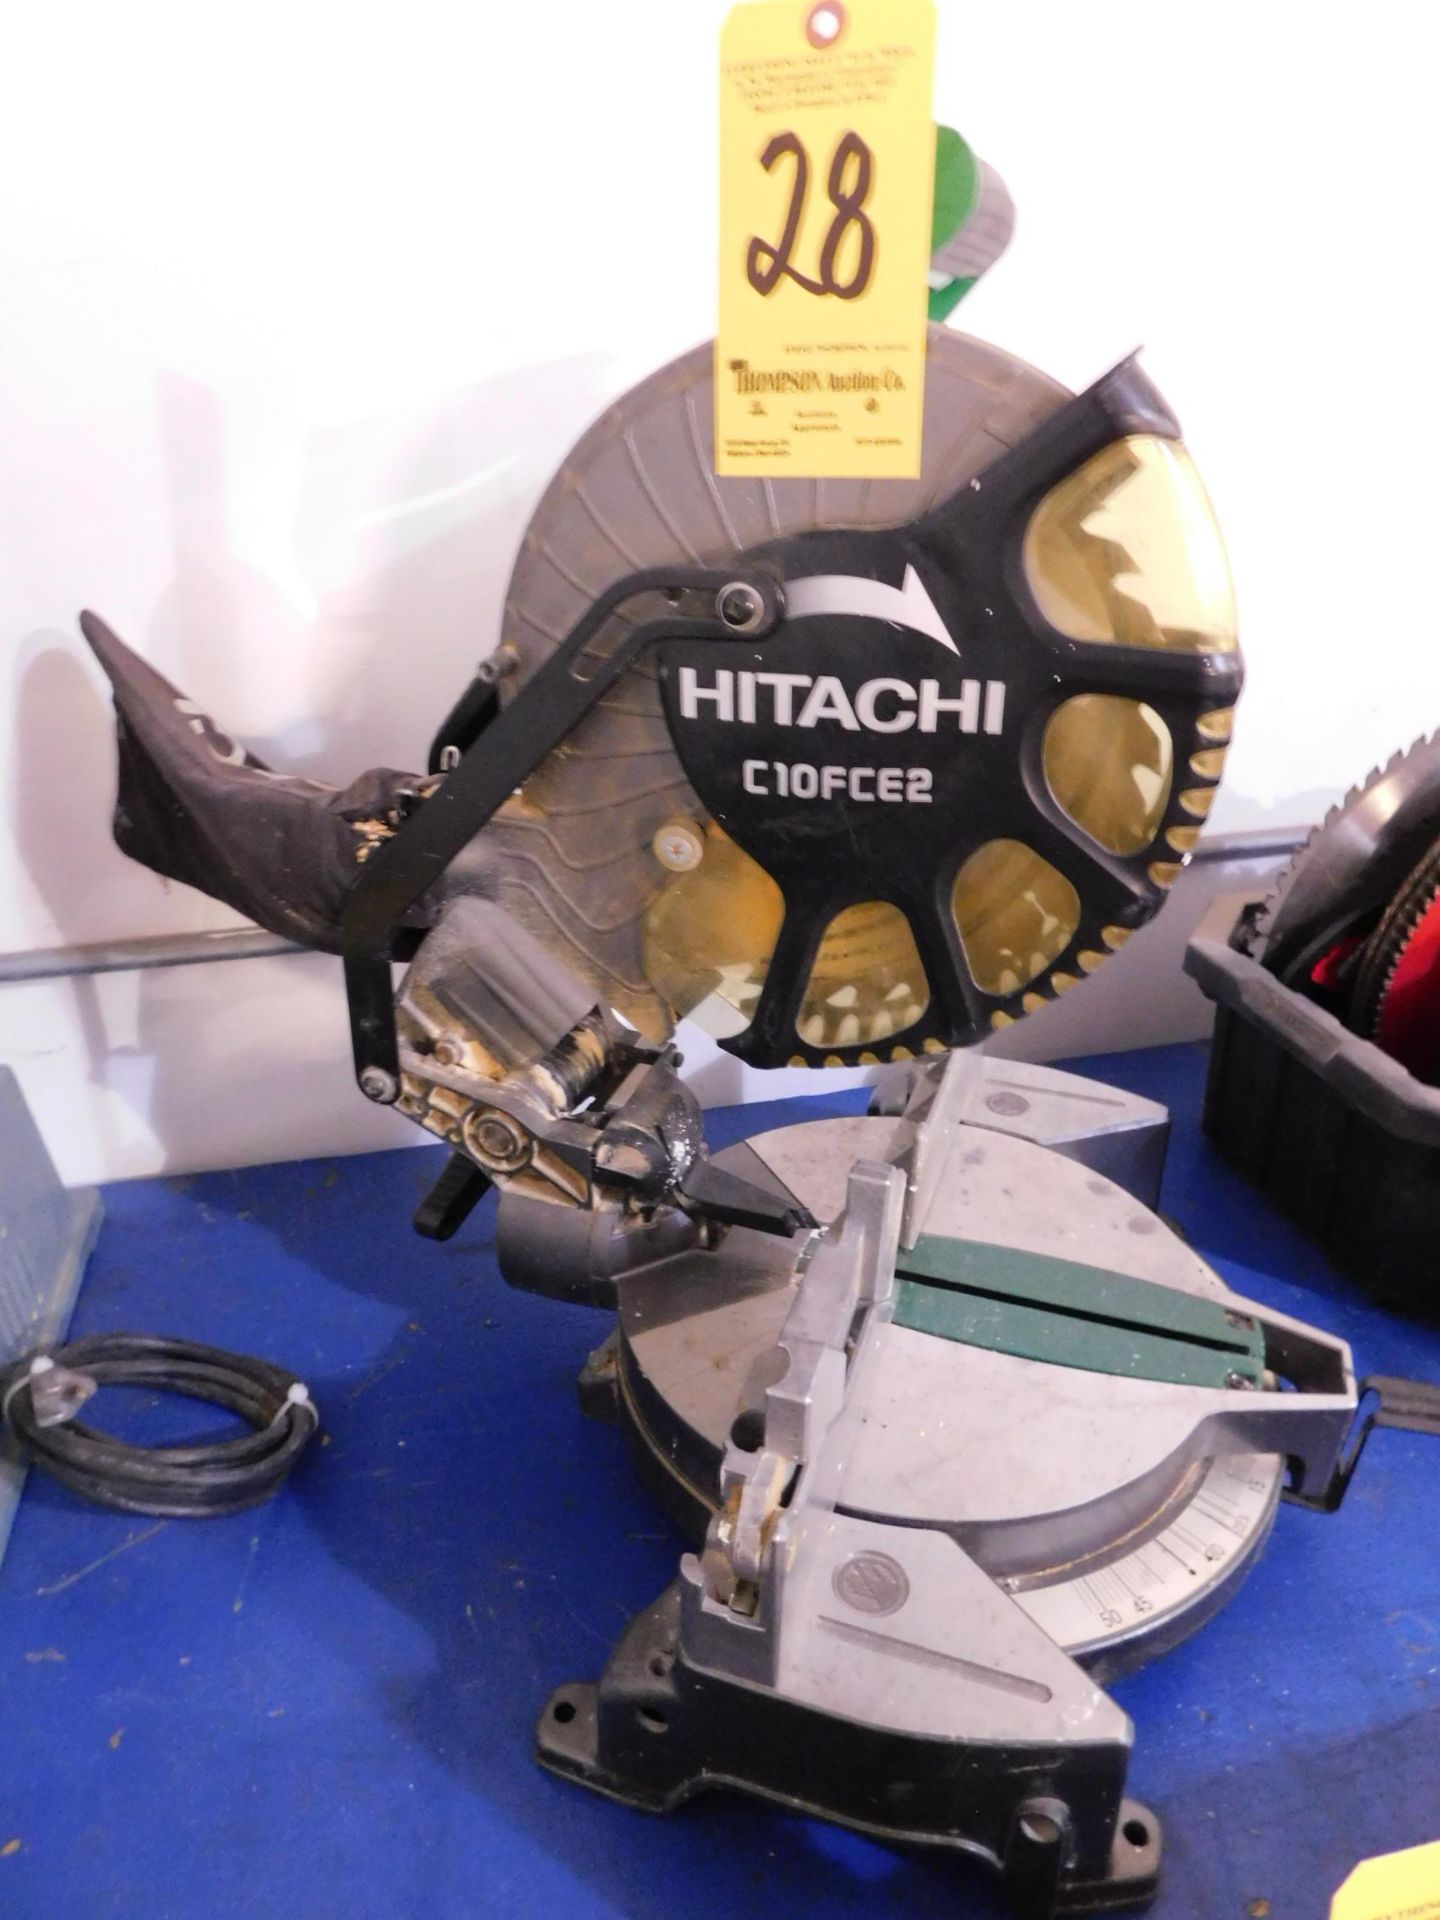 Hitachi C10FCE2 Compound Miter Saw